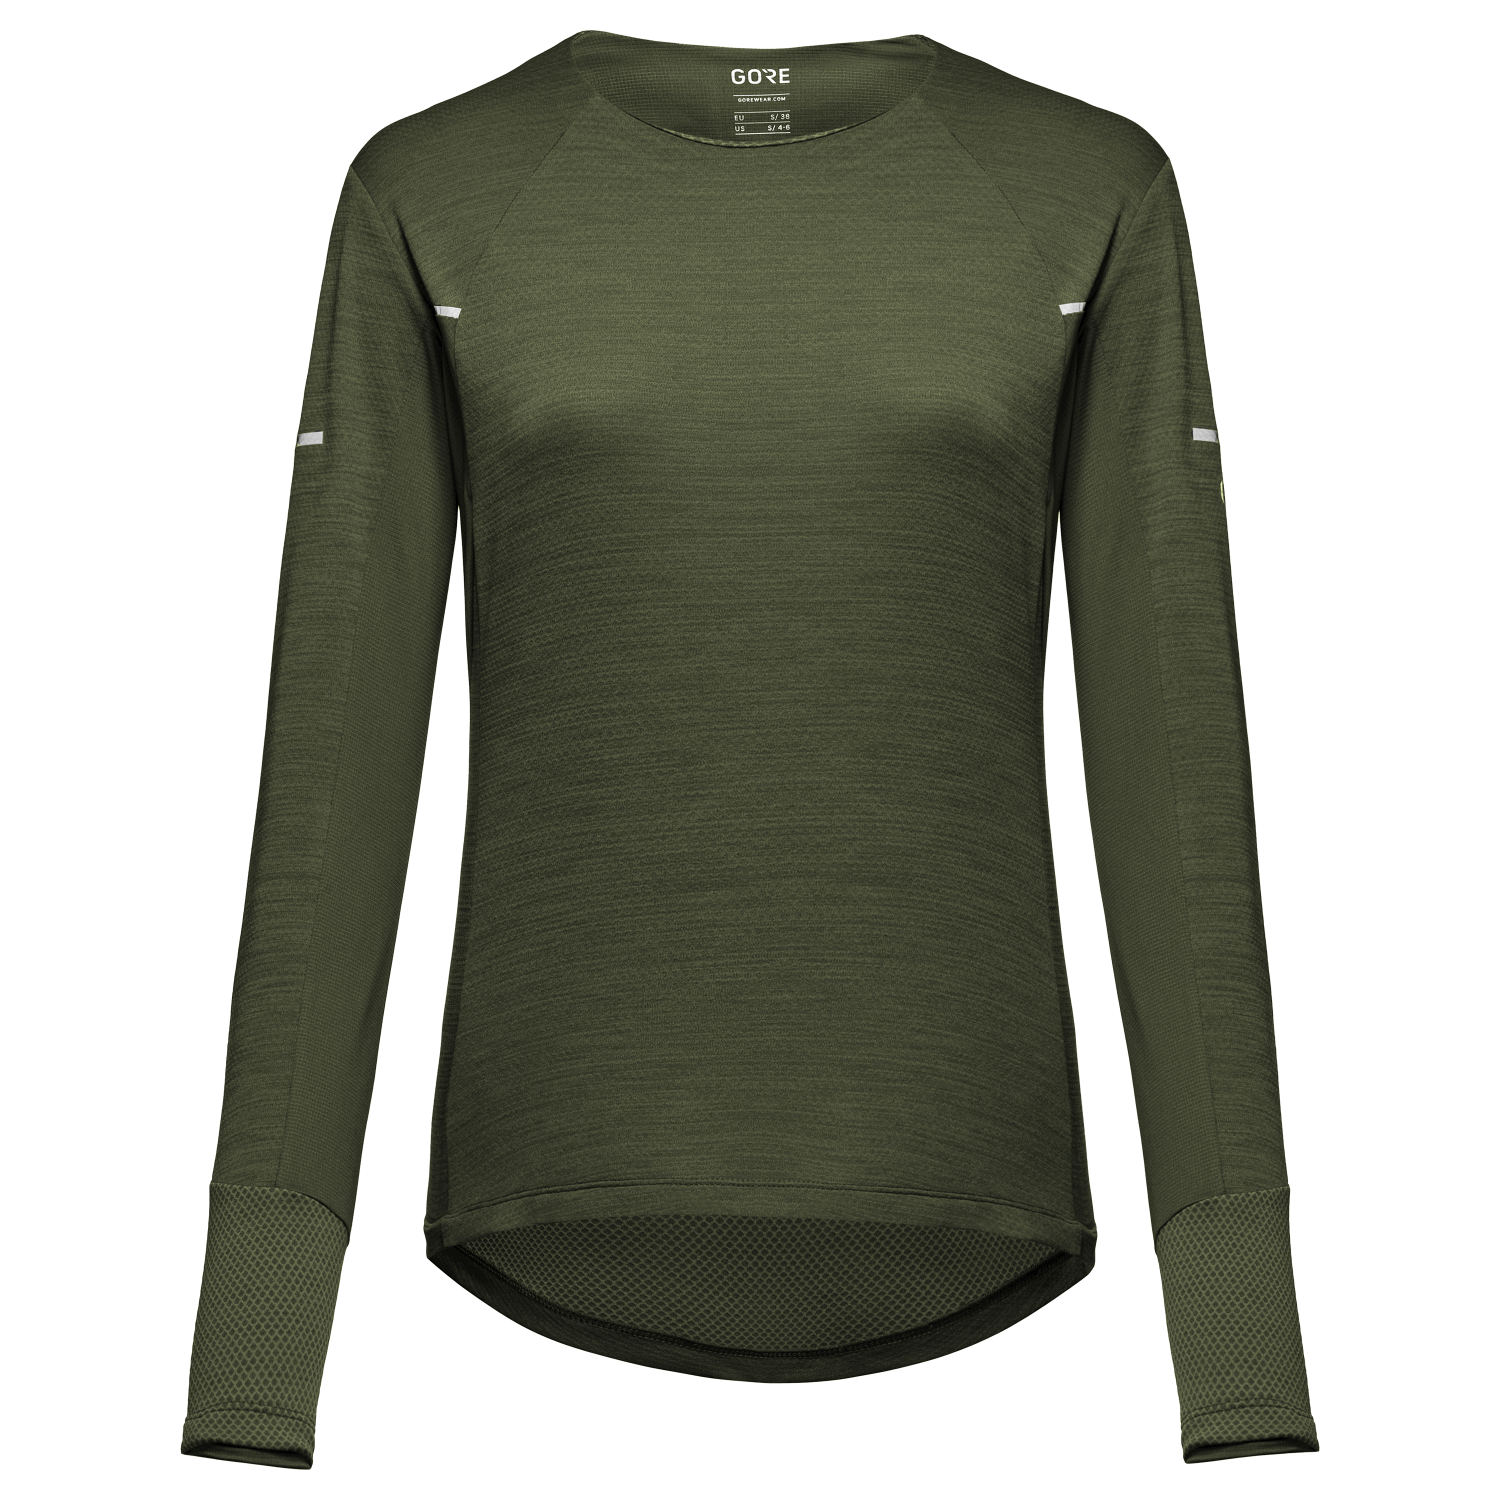 GOREWEAR Vivid Long Sleeve Running Shirt Women's in Utility Green | Medium (8-10) | Slim fit